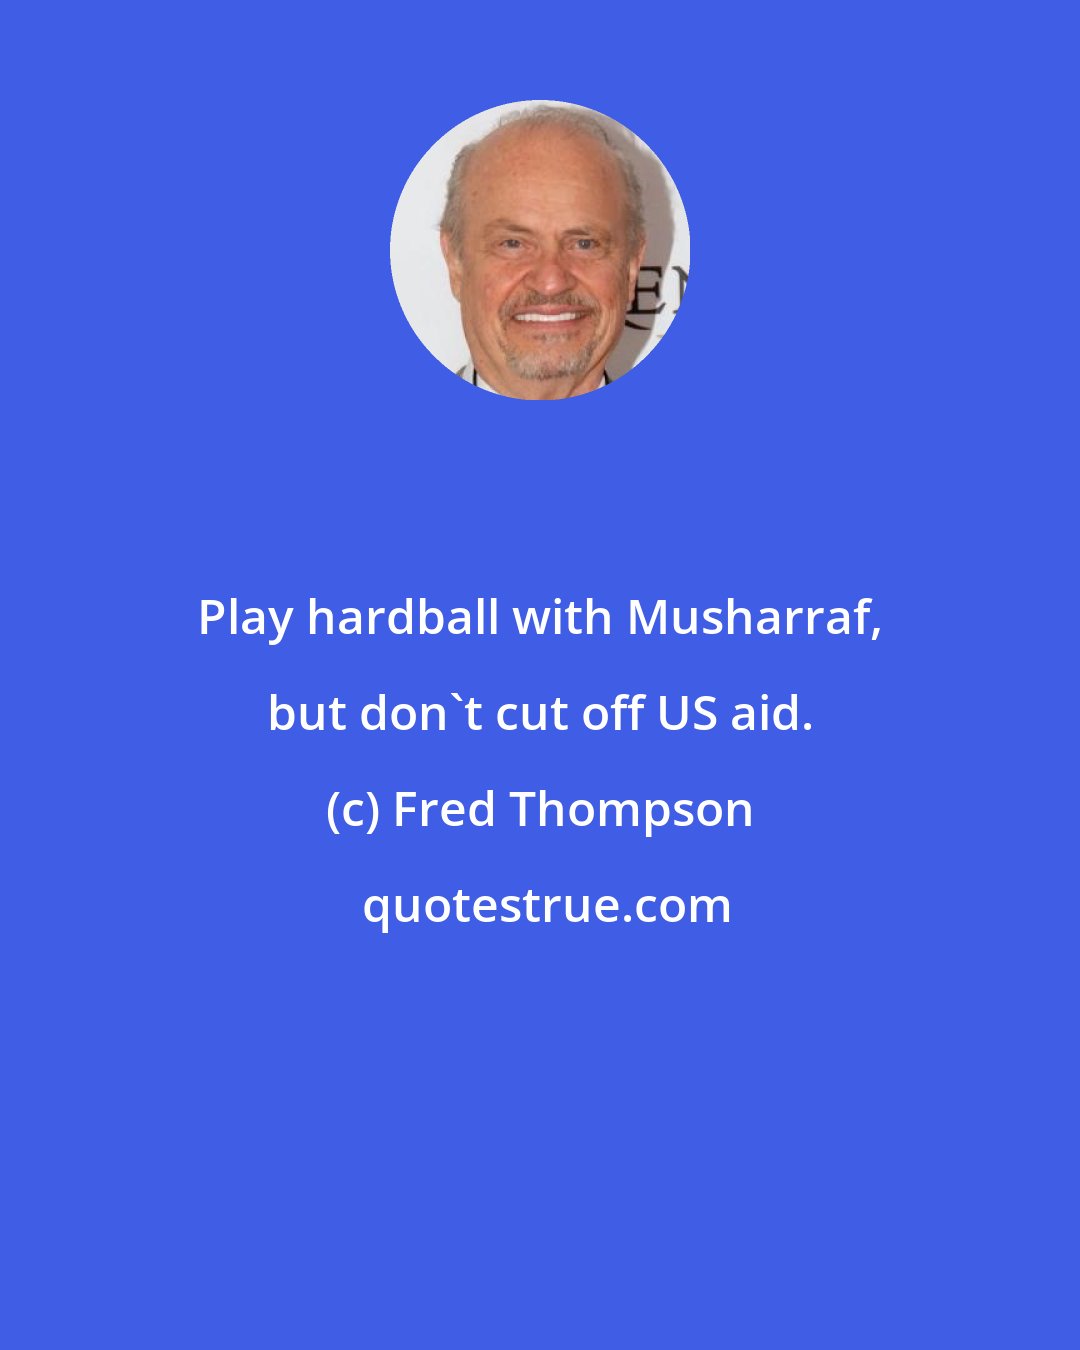 Fred Thompson: Play hardball with Musharraf, but don't cut off US aid.